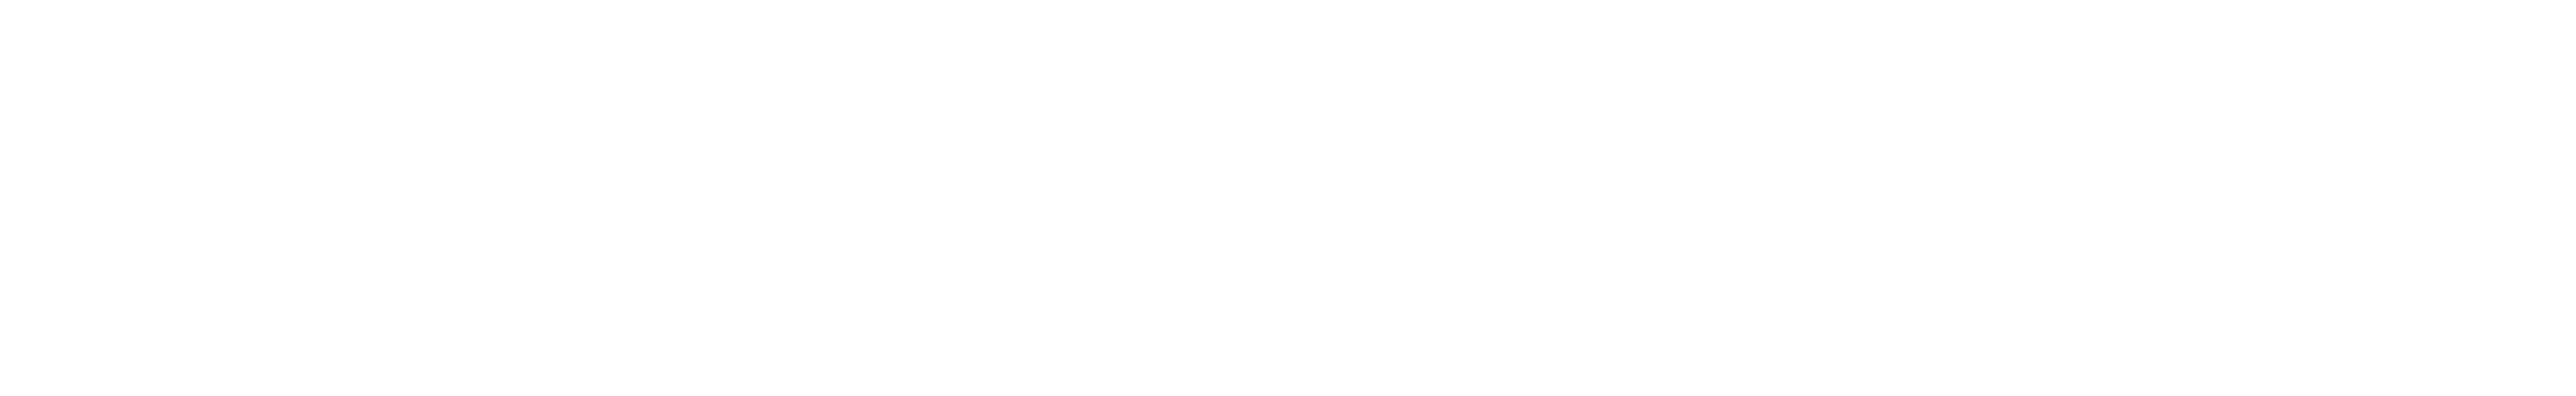 Cooper Tires Logo (Horizontal) WHITE ON TRANSPARENT BACKGROUND JPEG